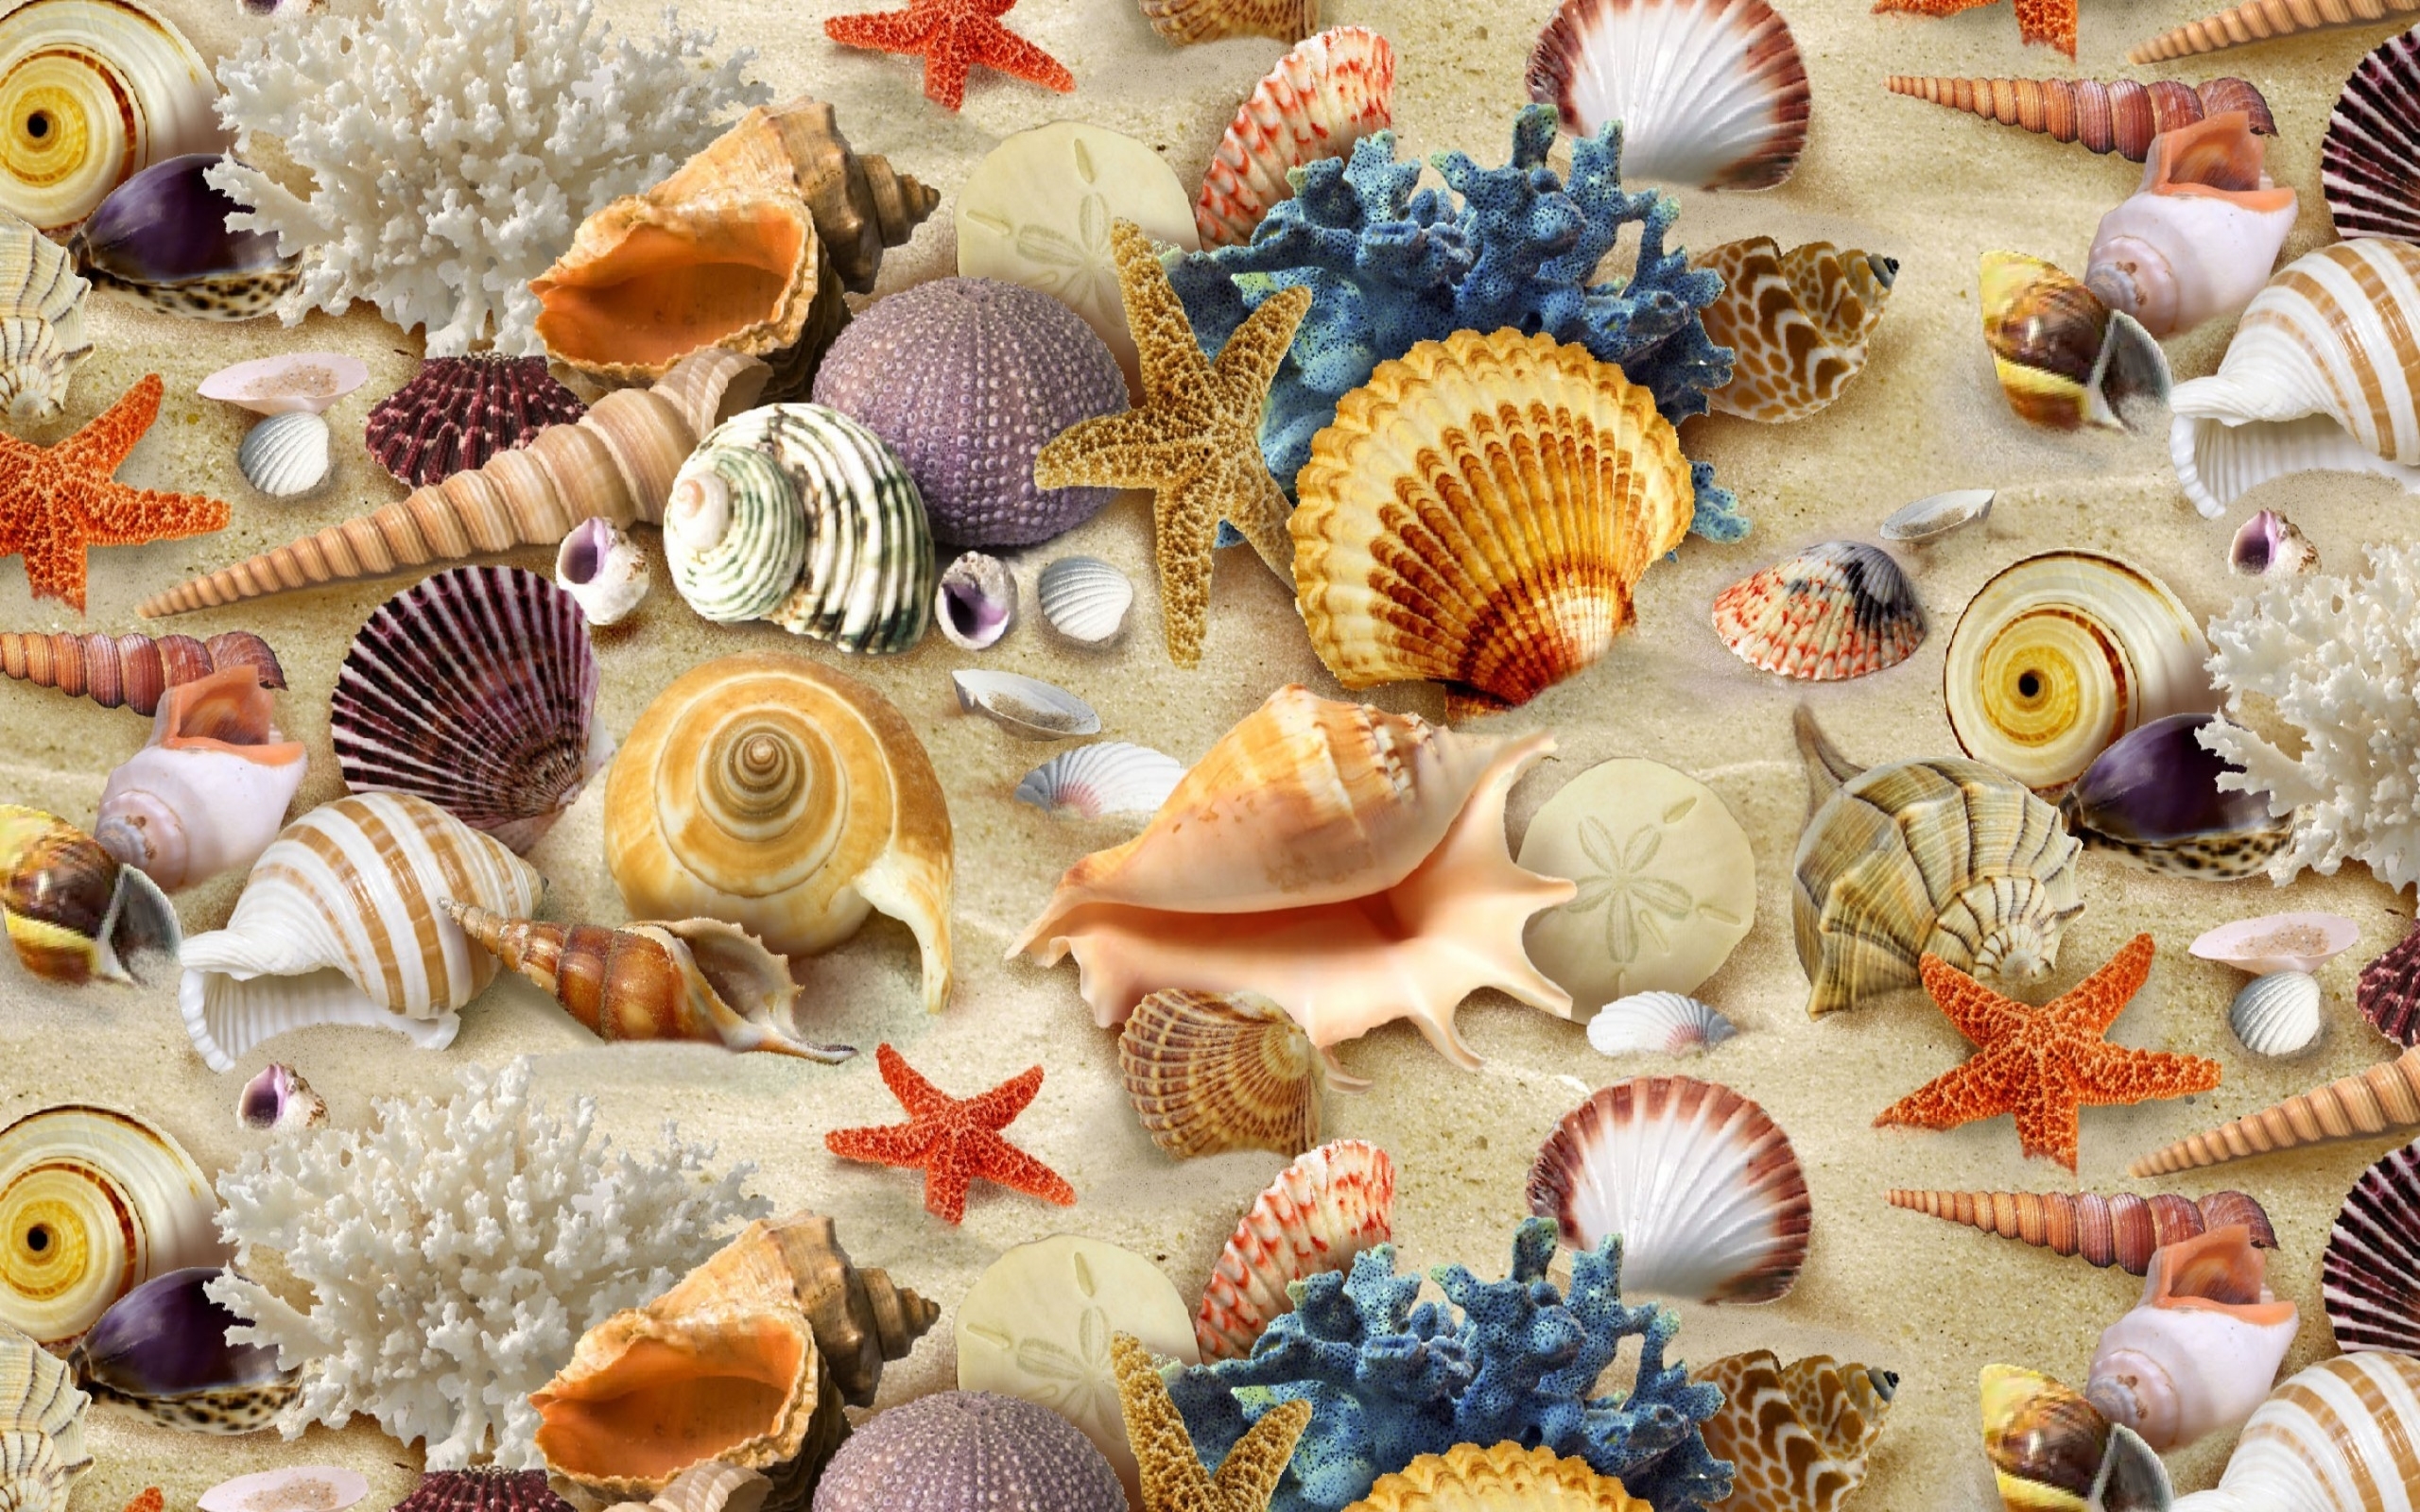 792343 descargar imagen estrella de mar, tierra/naturaleza, concha, vistoso, colores, coral, arena, vieira: fondos de pantalla y protectores de pantalla gratis